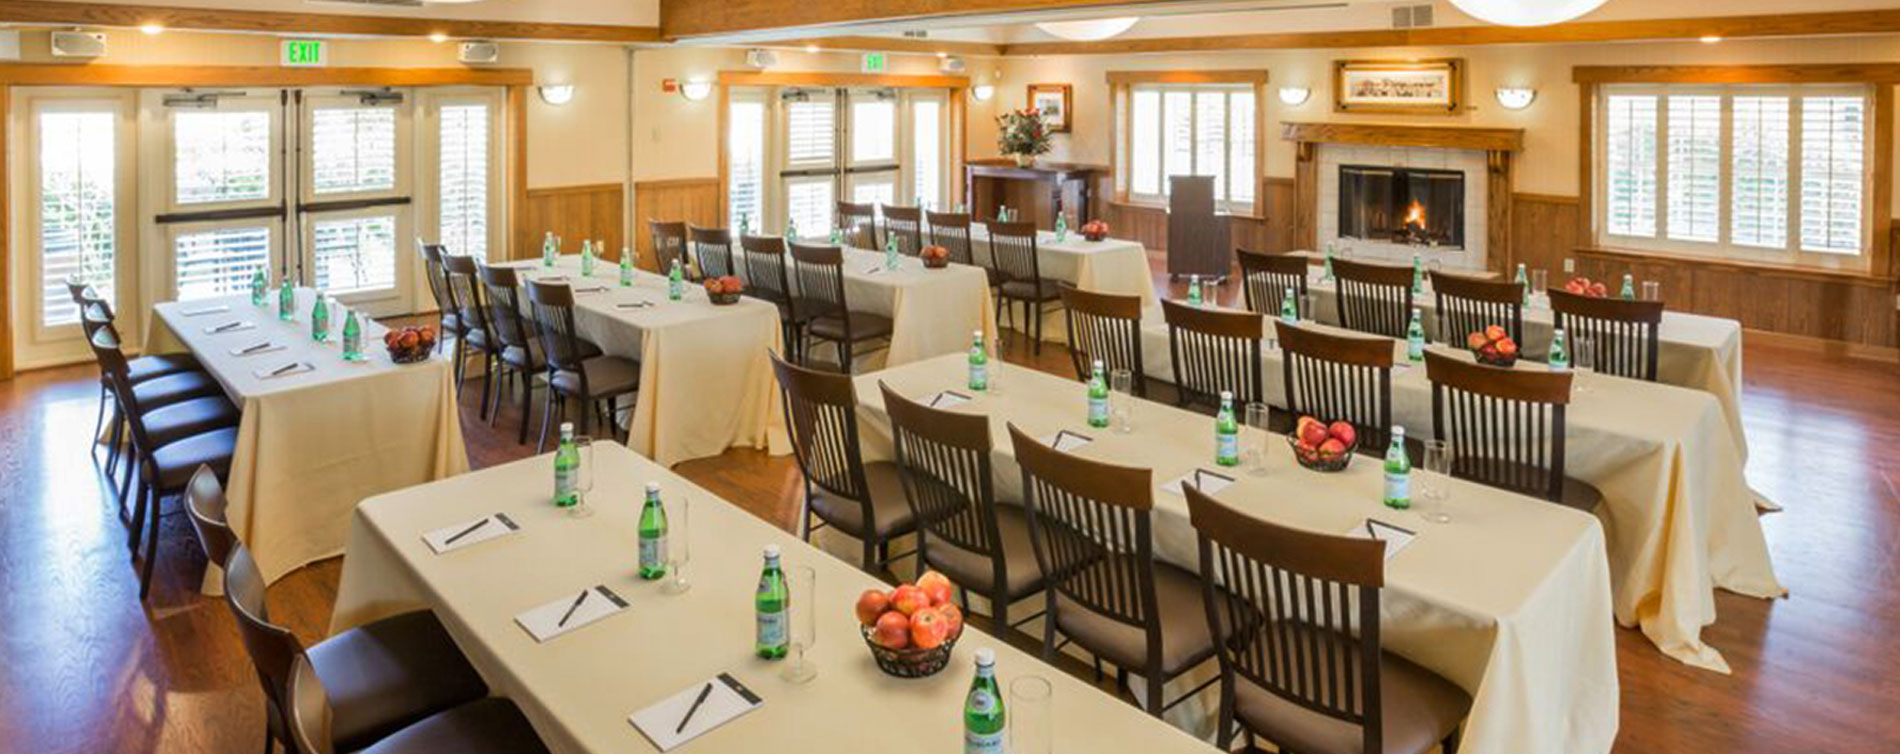 Meetings at BEST WESTERN Sonoma Valley Inn & Krug Event Center, California